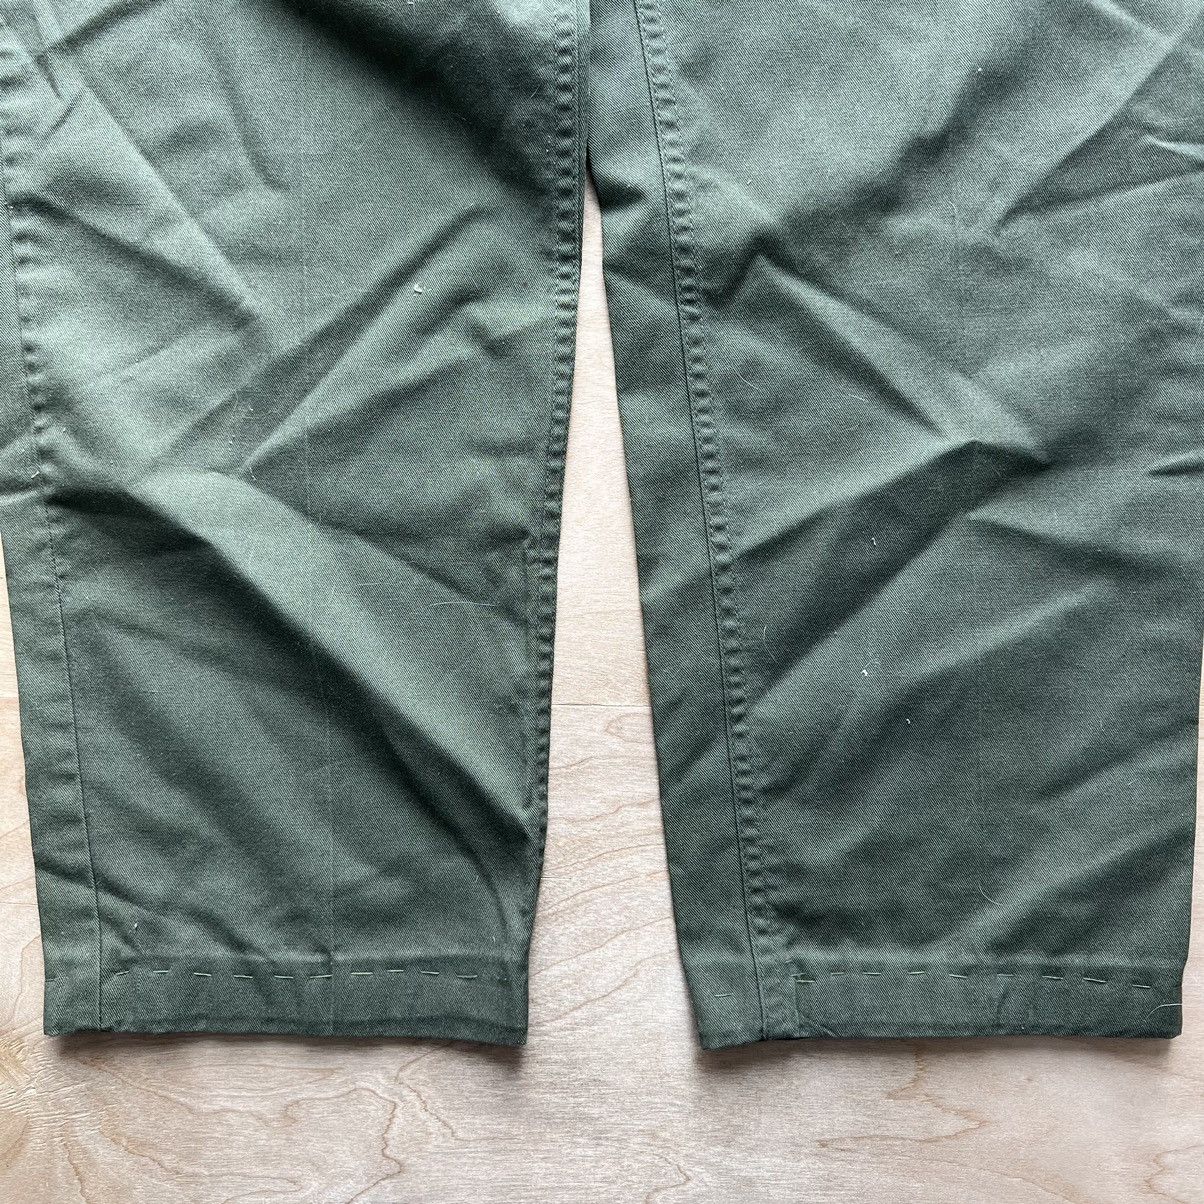 Vintage Vintage Military OG 507 Pants 26x28.5 Green Army Workwear Size US 26 / EU 42 - 4 Thumbnail